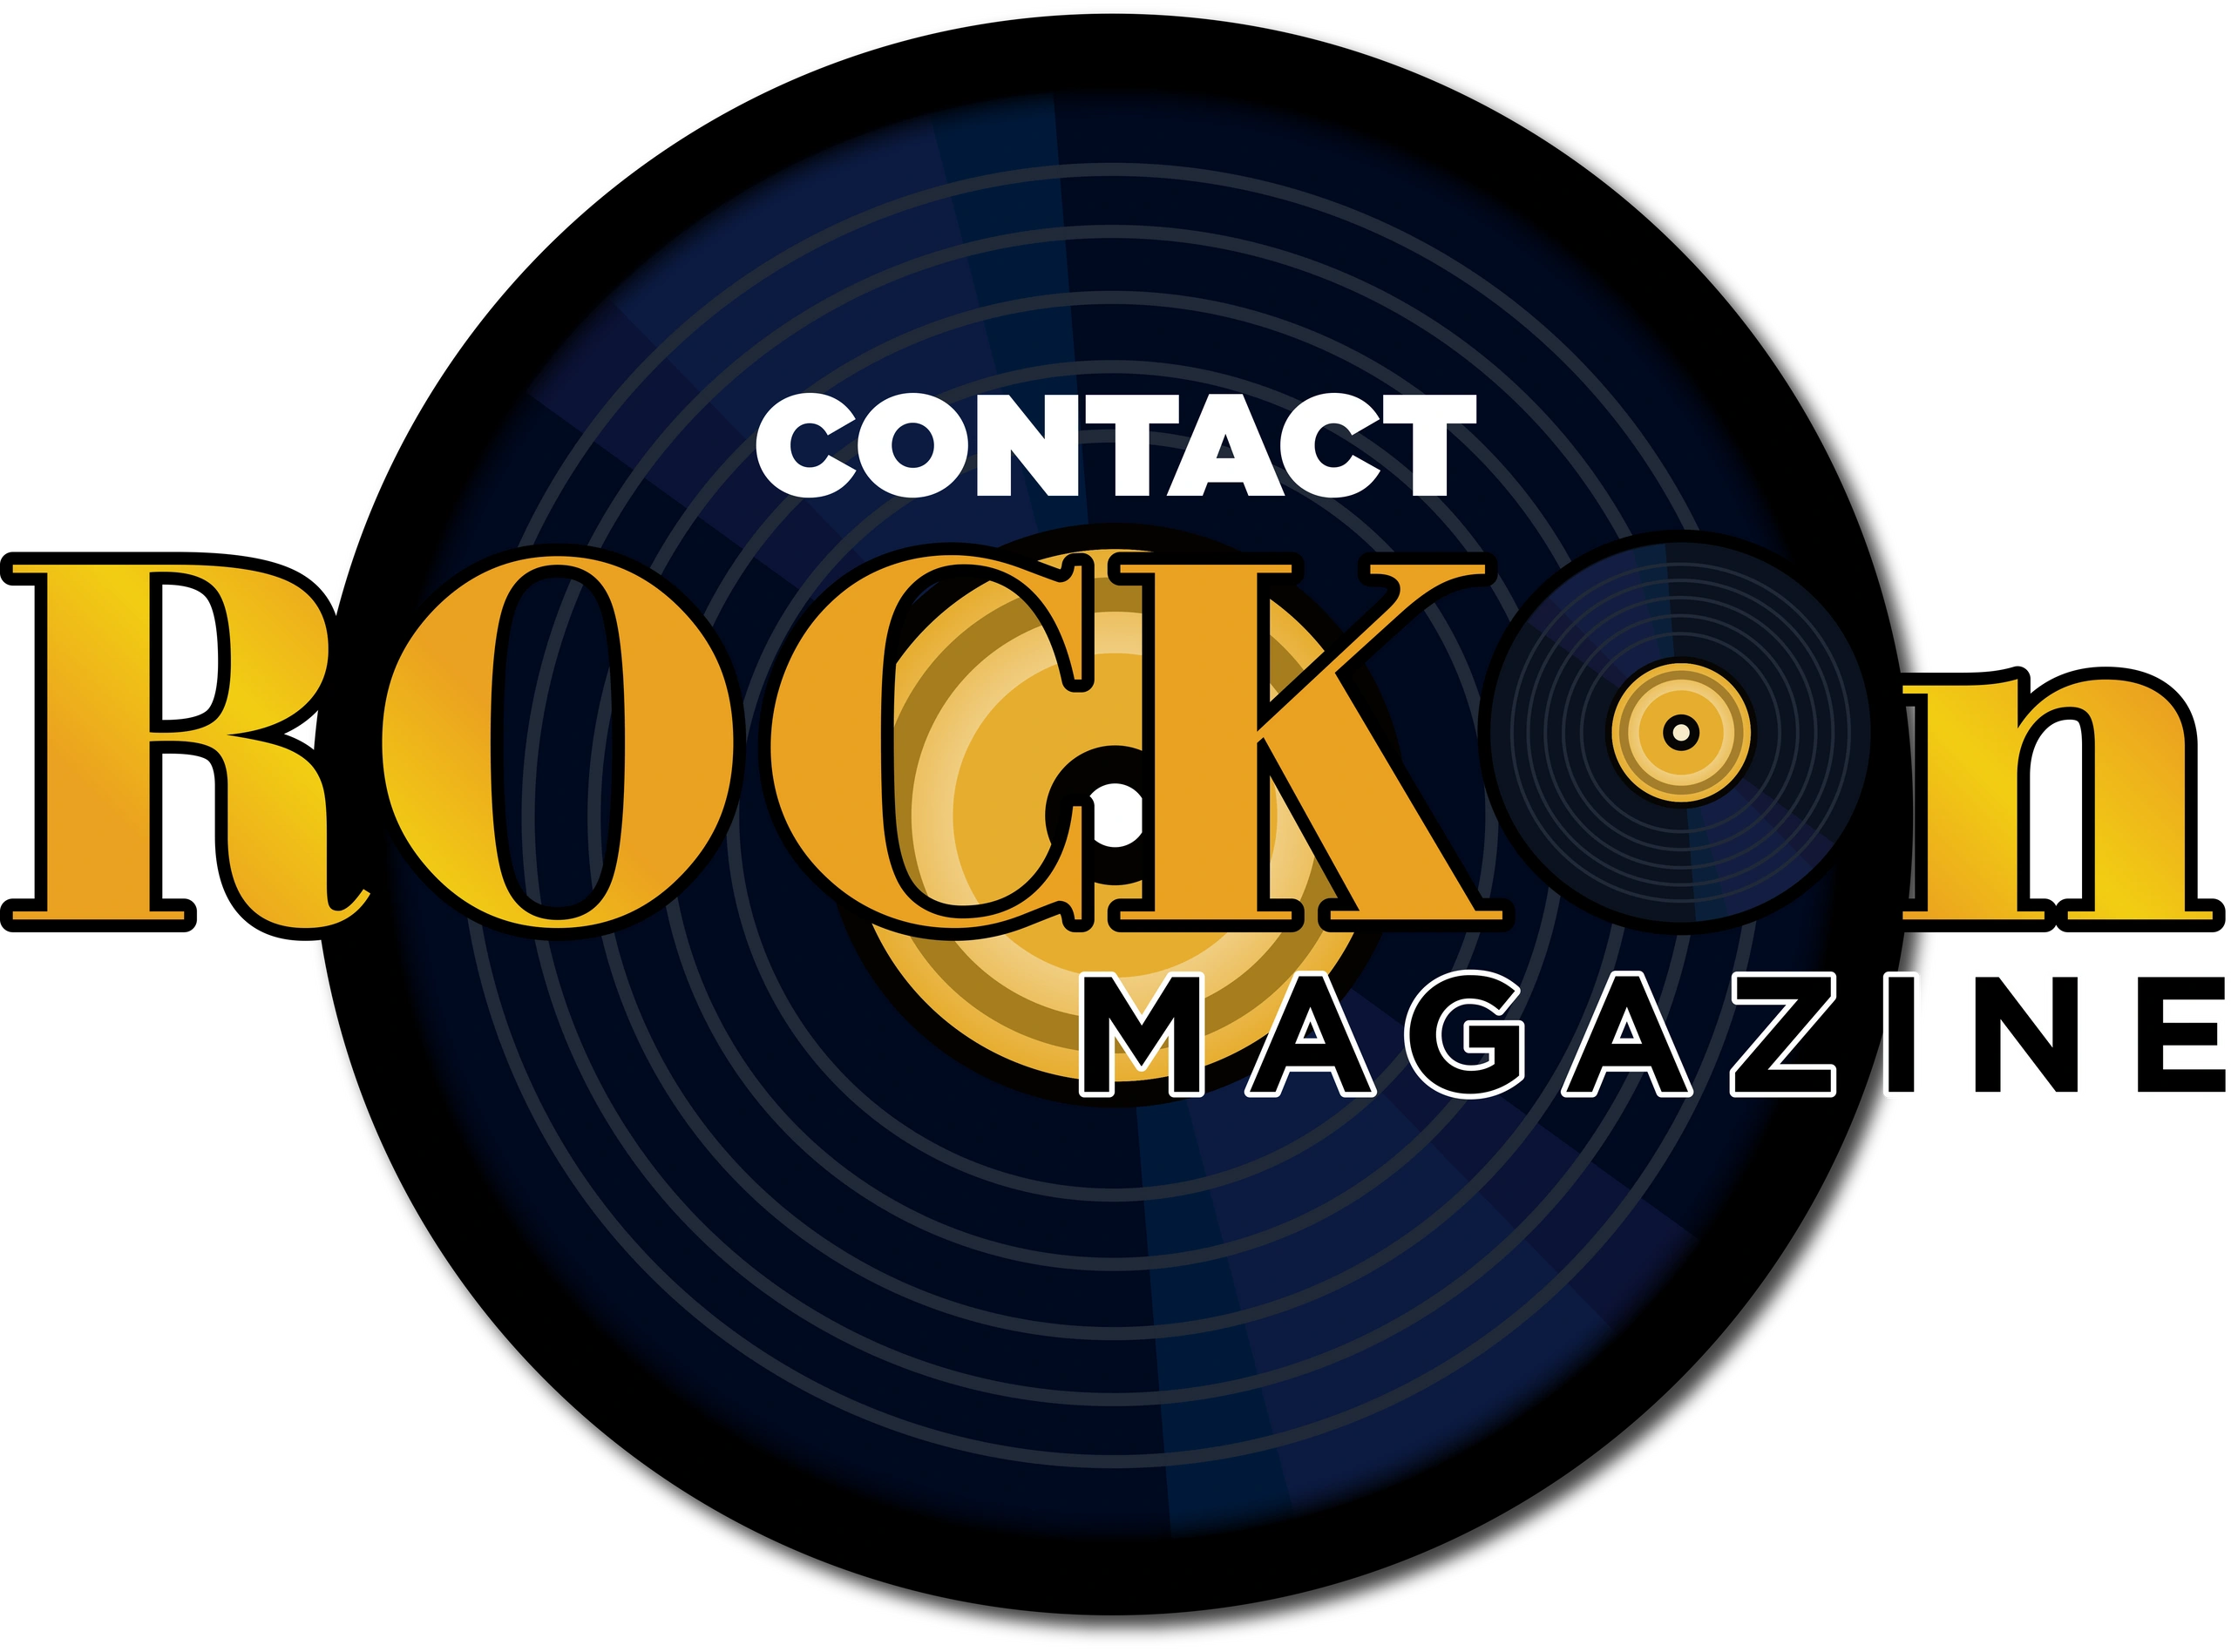 Contact Rock On Magazine